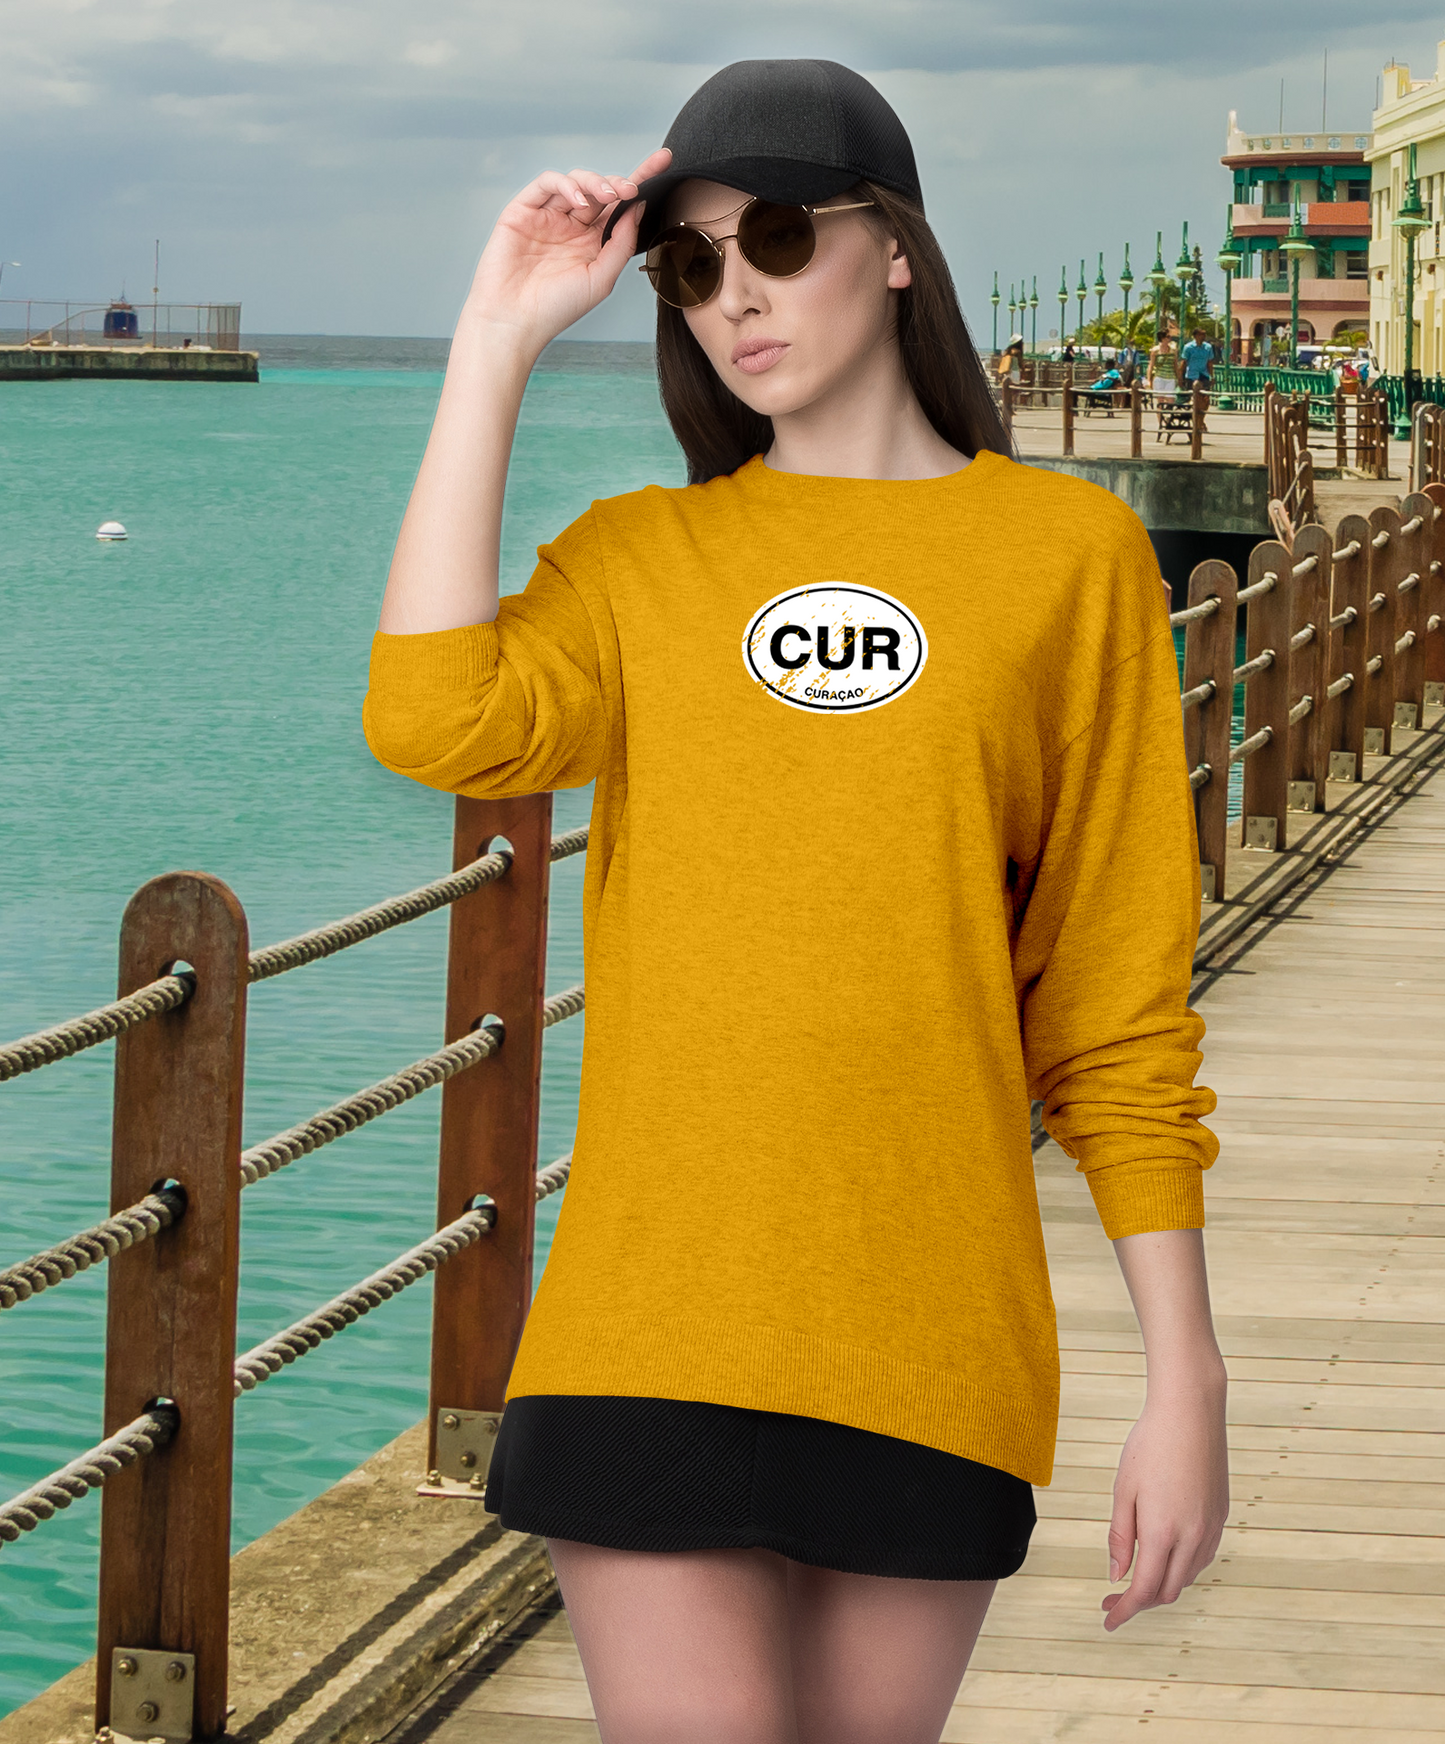 Curacao Women's Classic Long Sleeve T-Shirts - My Destination Location